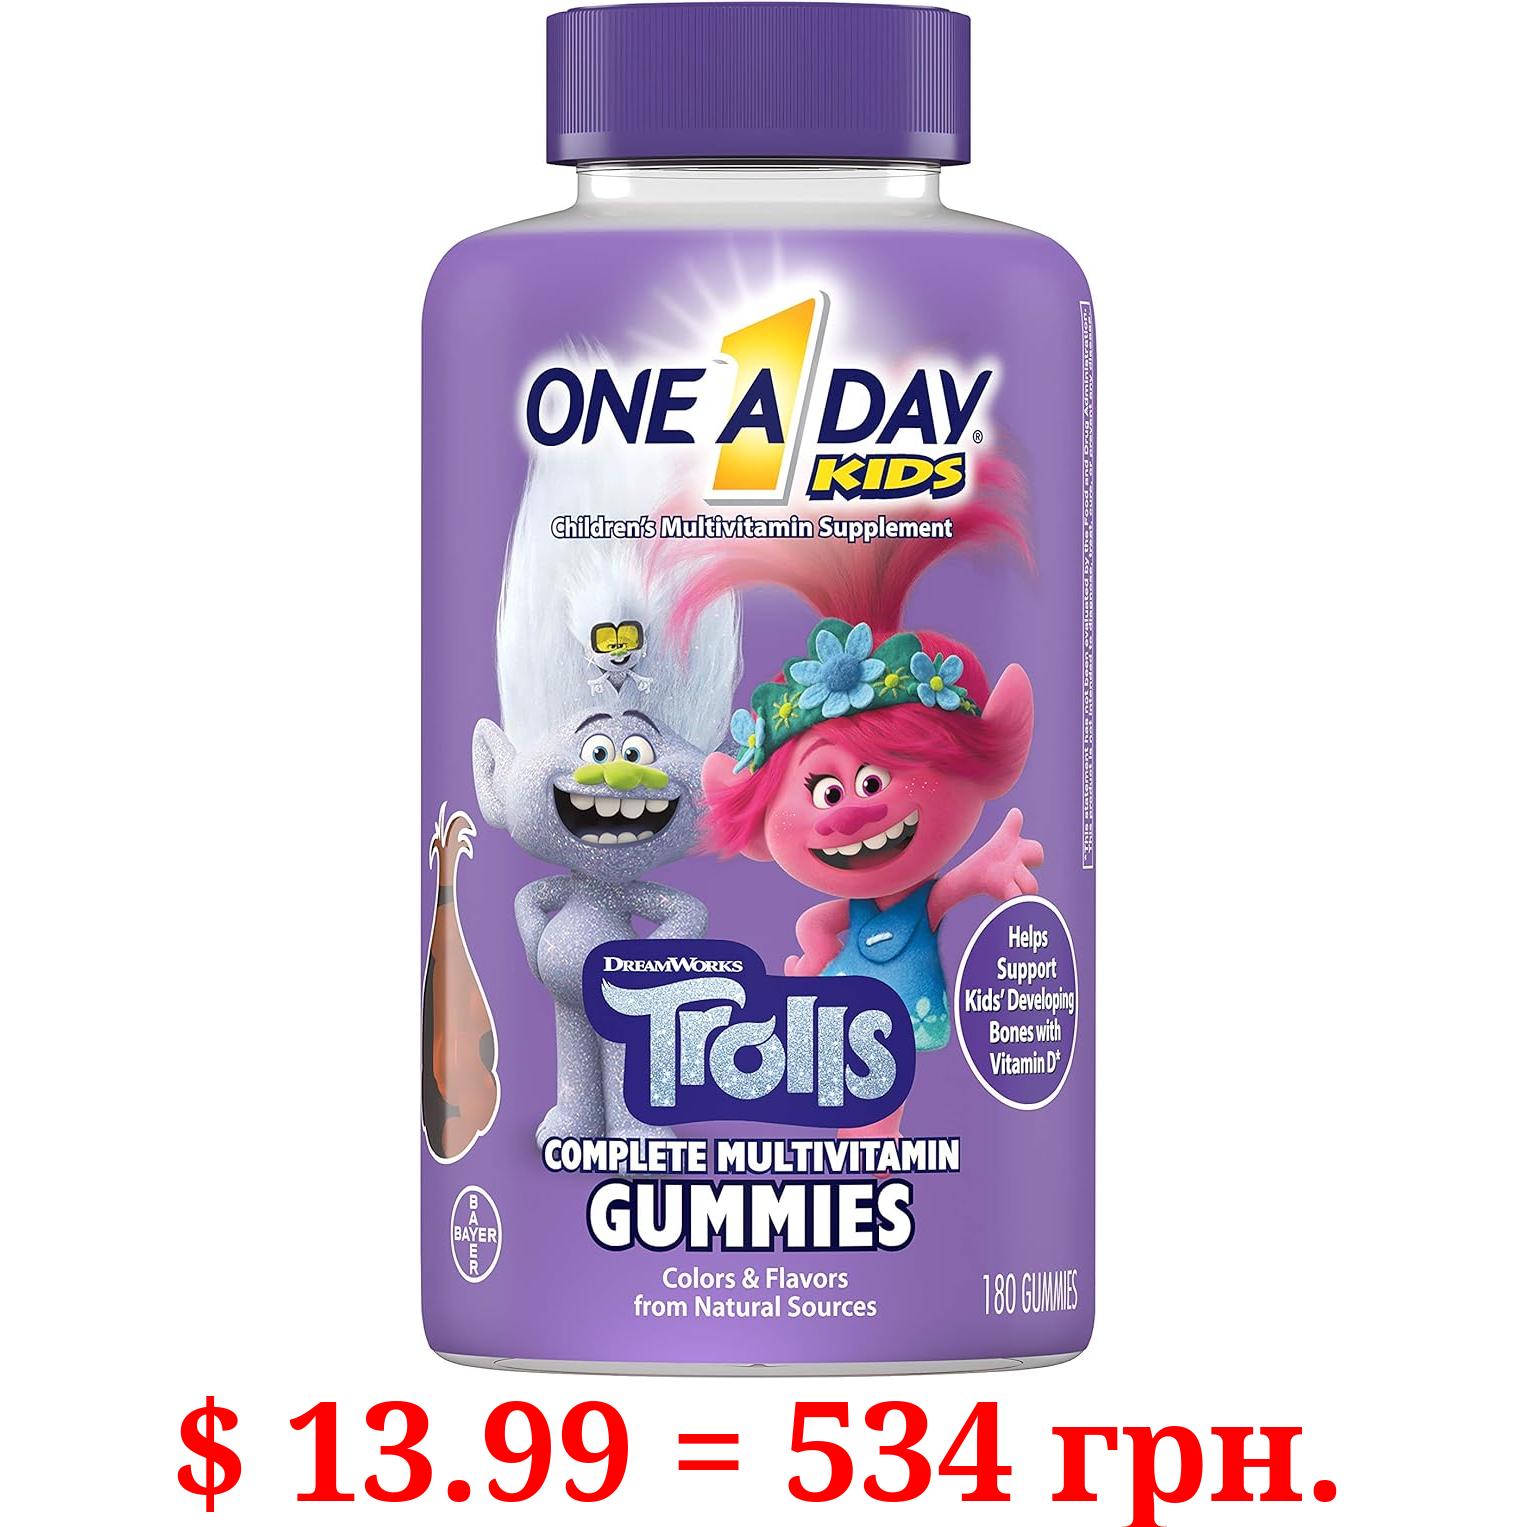 One A Day Kids Trolls Multivitamin Gummy, Kids Vitamins with Vitamins A, B6, B12, C, D, E, Zinc, Folic Acid and Biotin (Packaging May Vary), Trolls, 180 Count